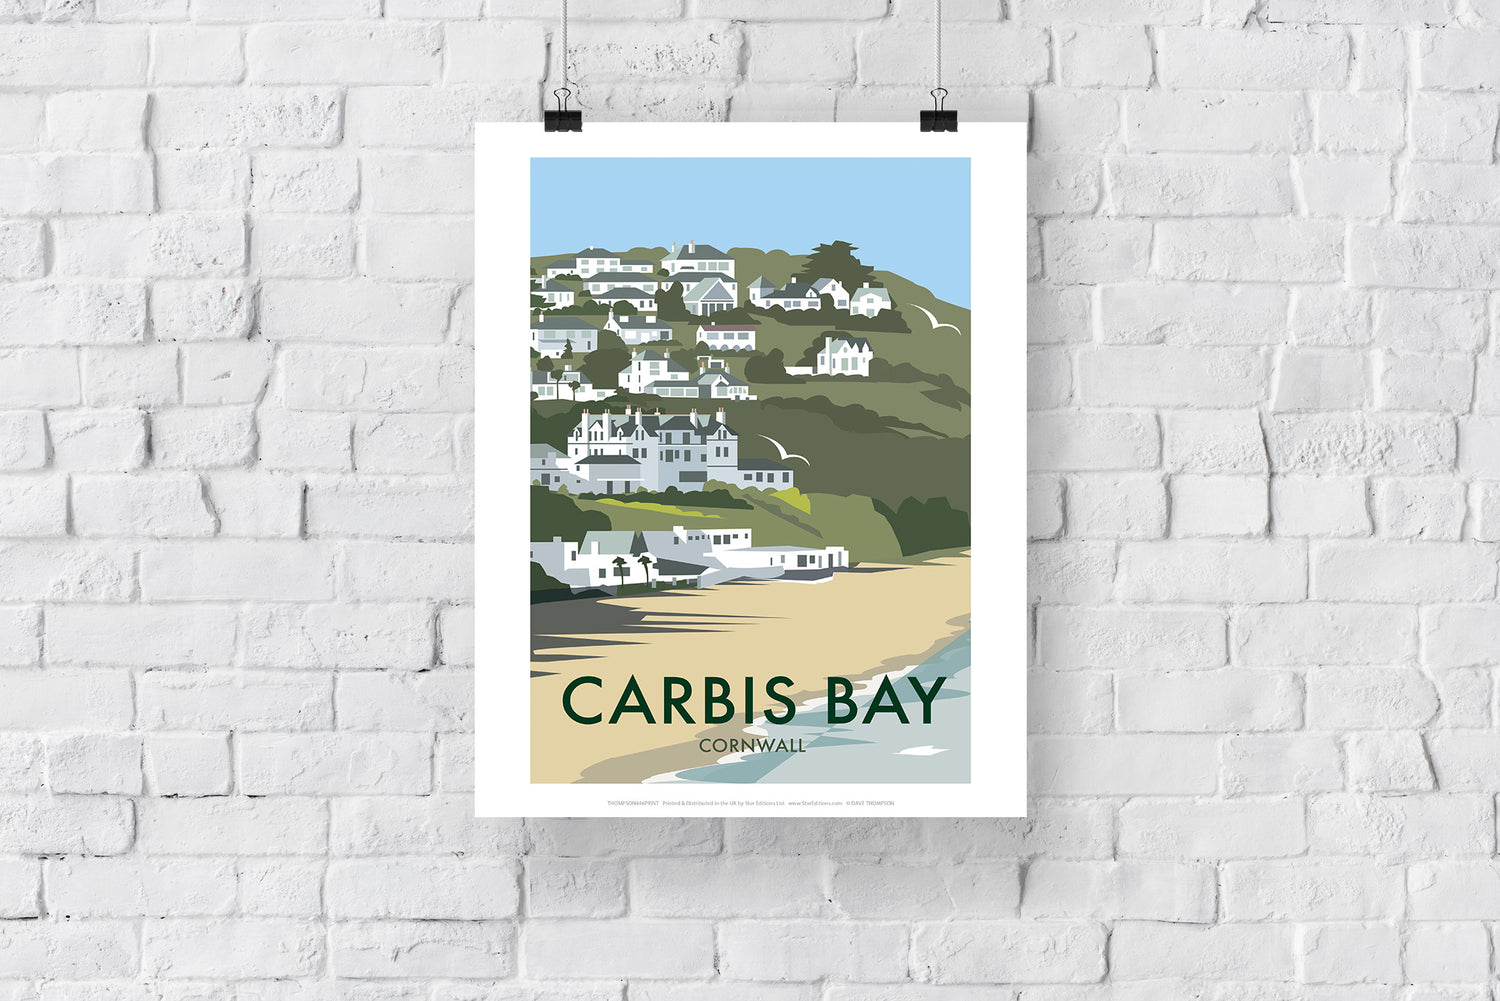 Carbis Bay, Cornwall - Art Print